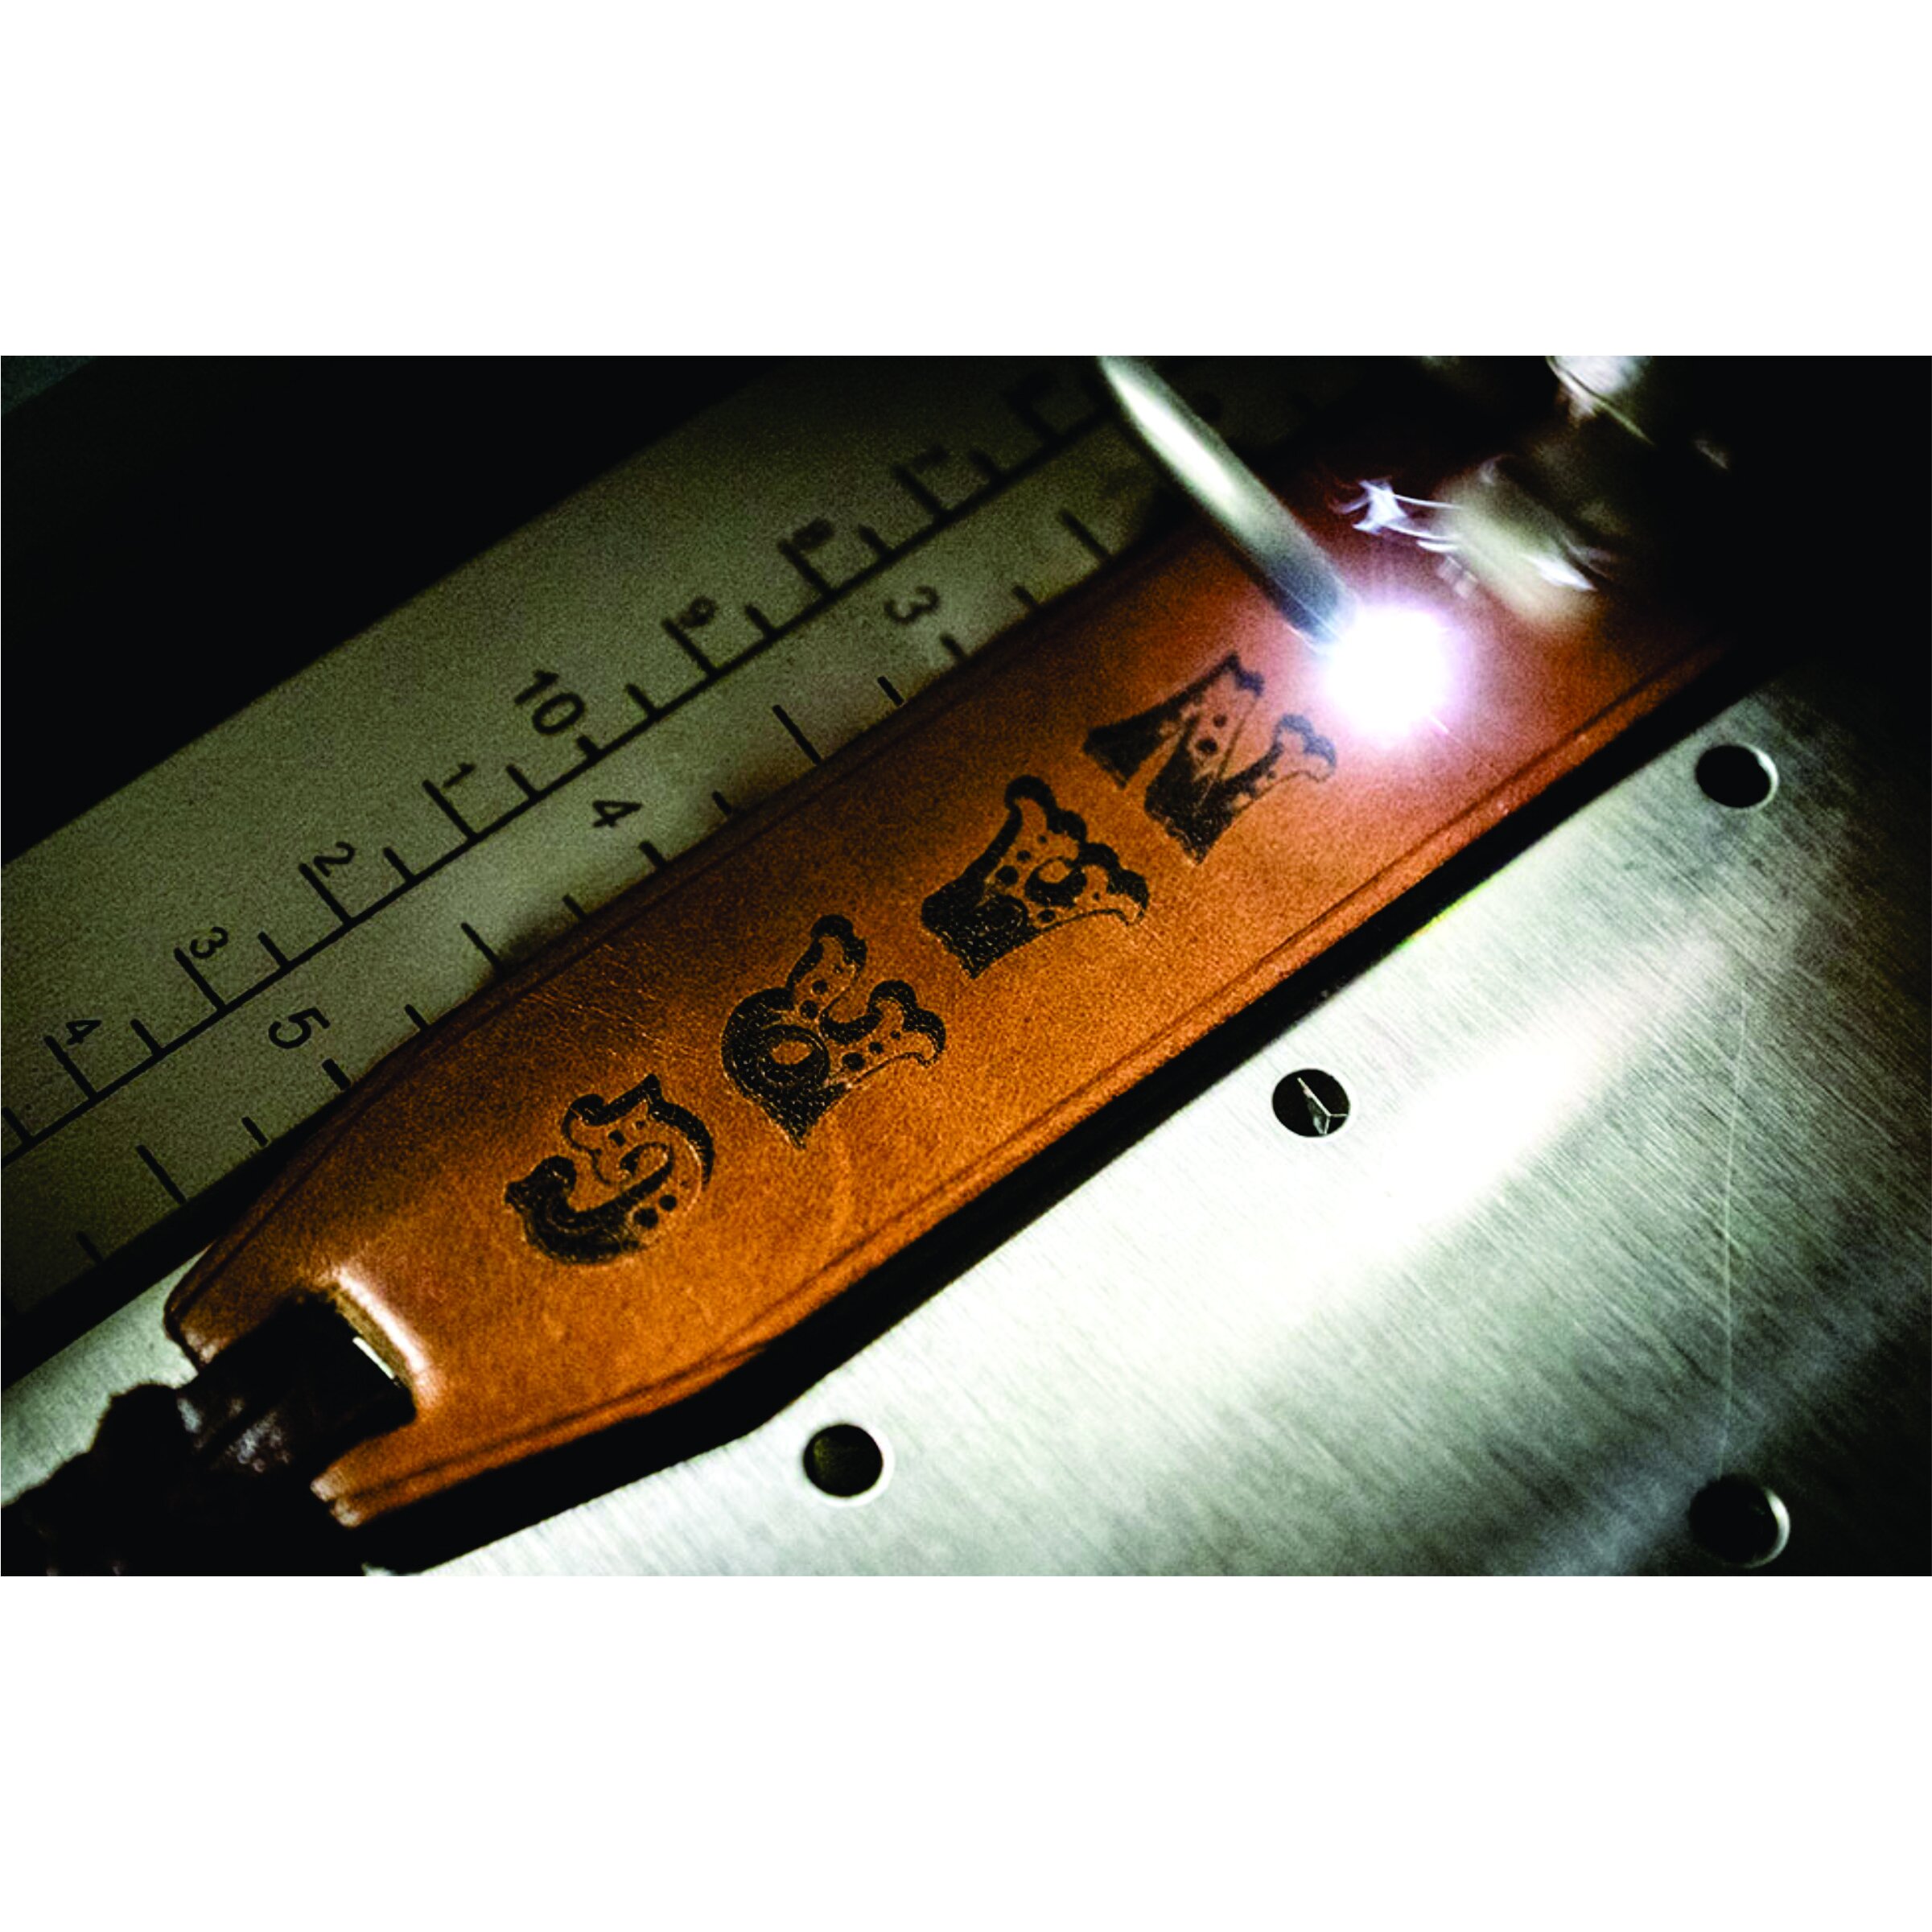 fab-laser-engraving-leather-bookmark.jpg